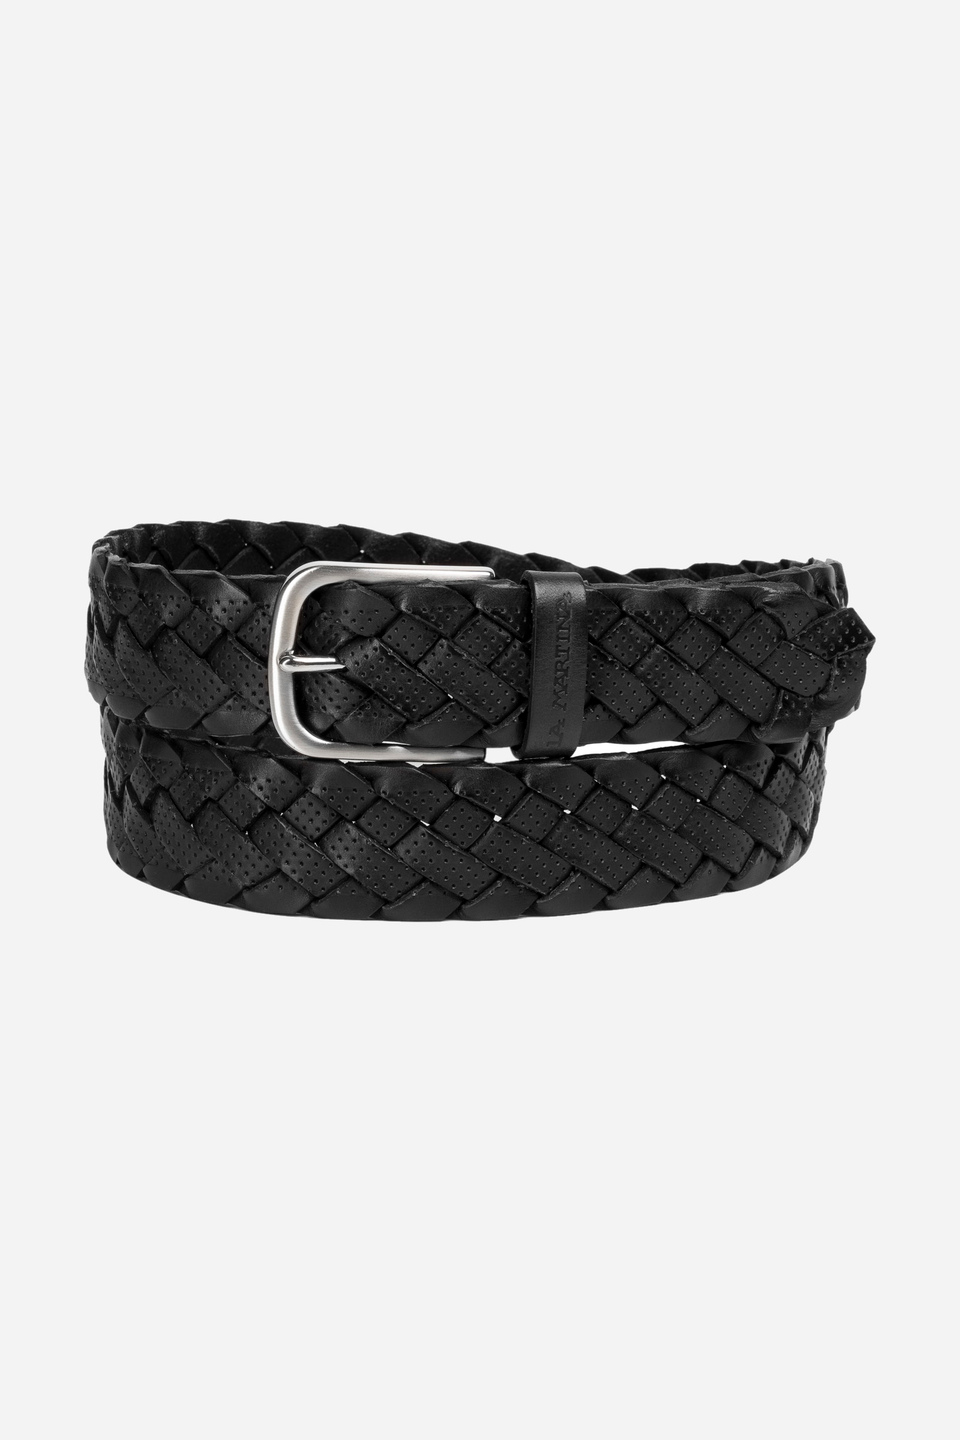 Men's belt in woven leather | La Martina - Official Online Shop